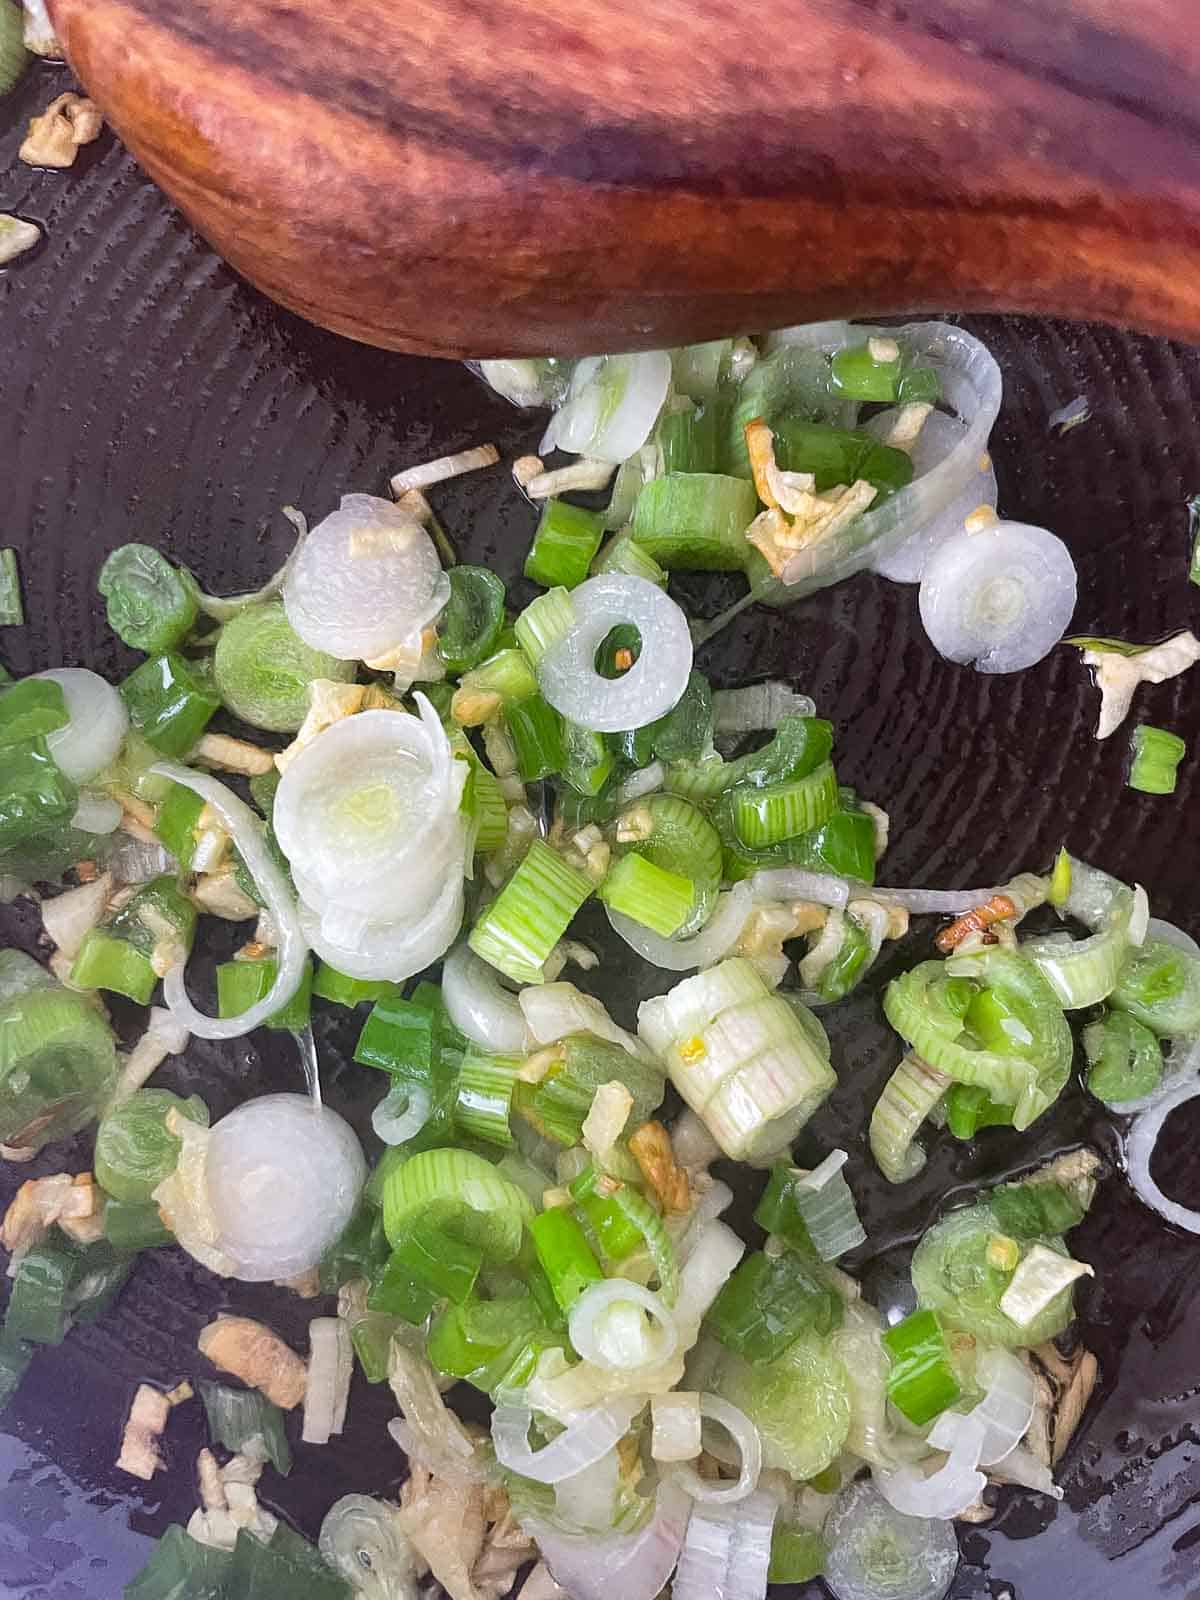 Sauteed garlic and green onions